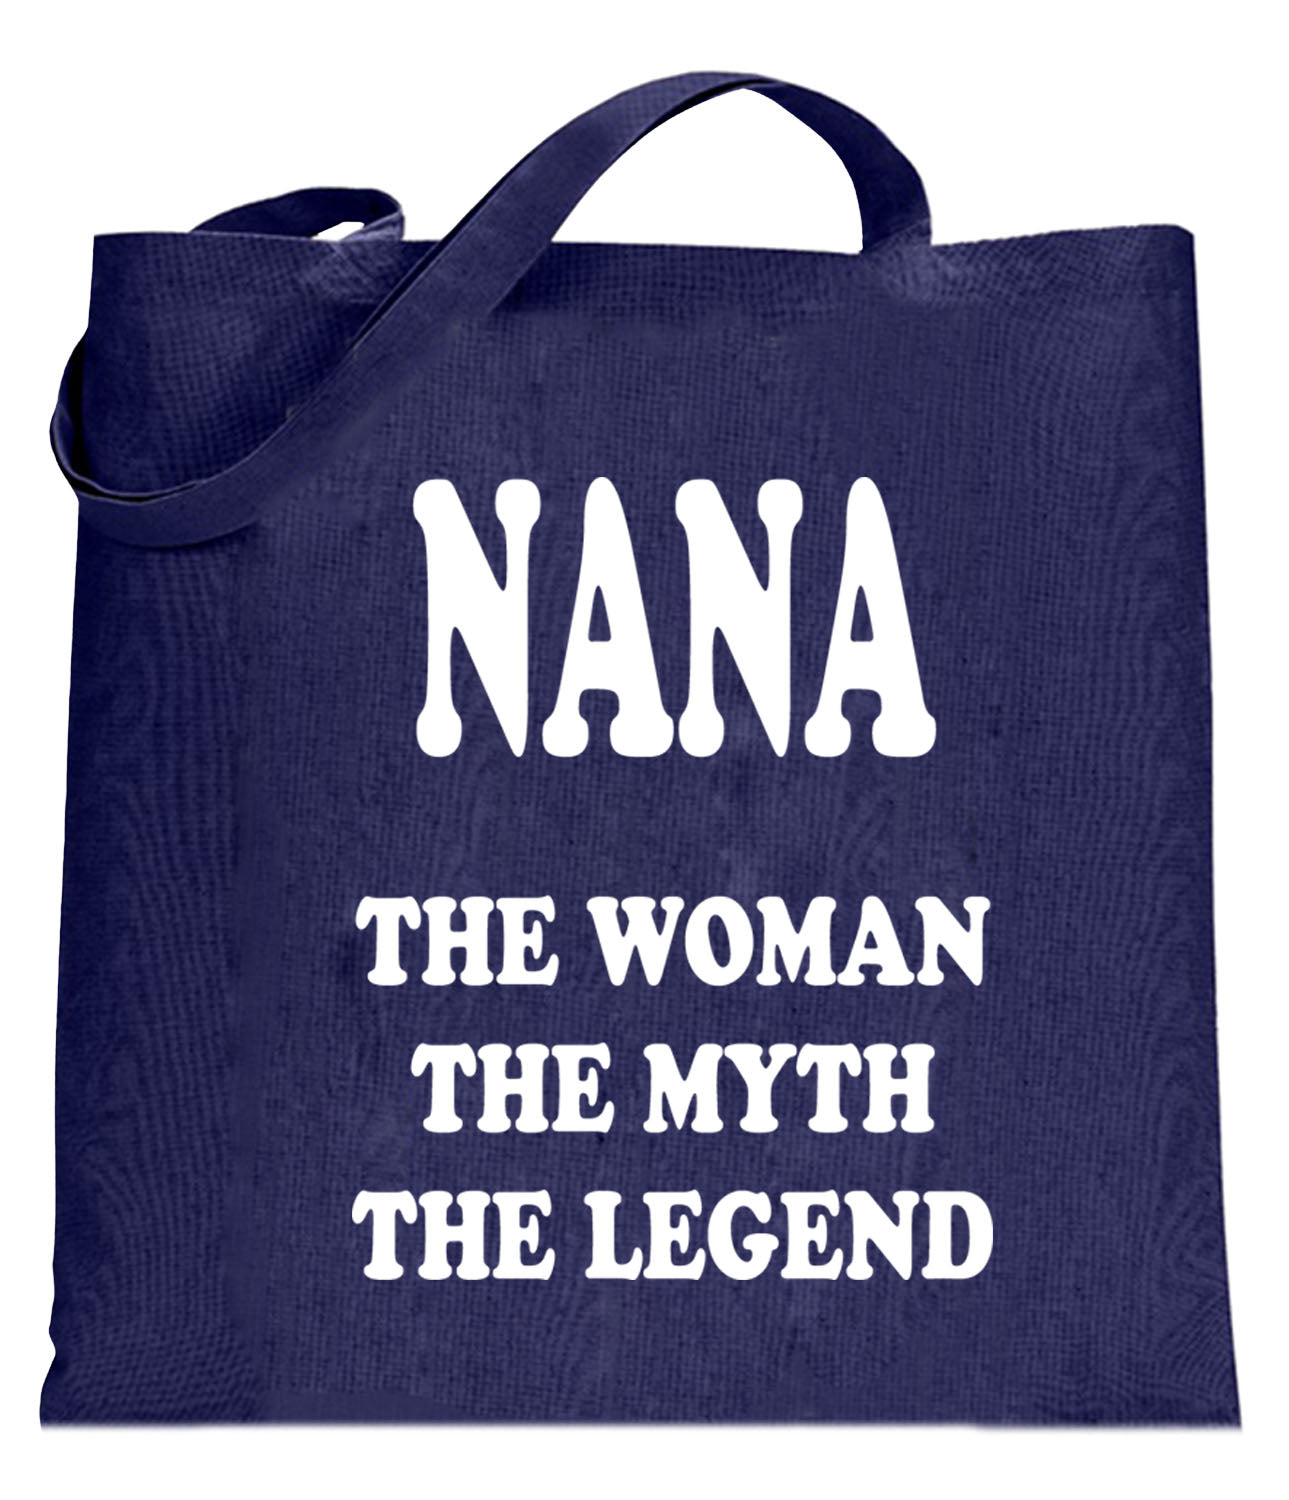 Nana The Woman The Myth The Legend Tote Bag